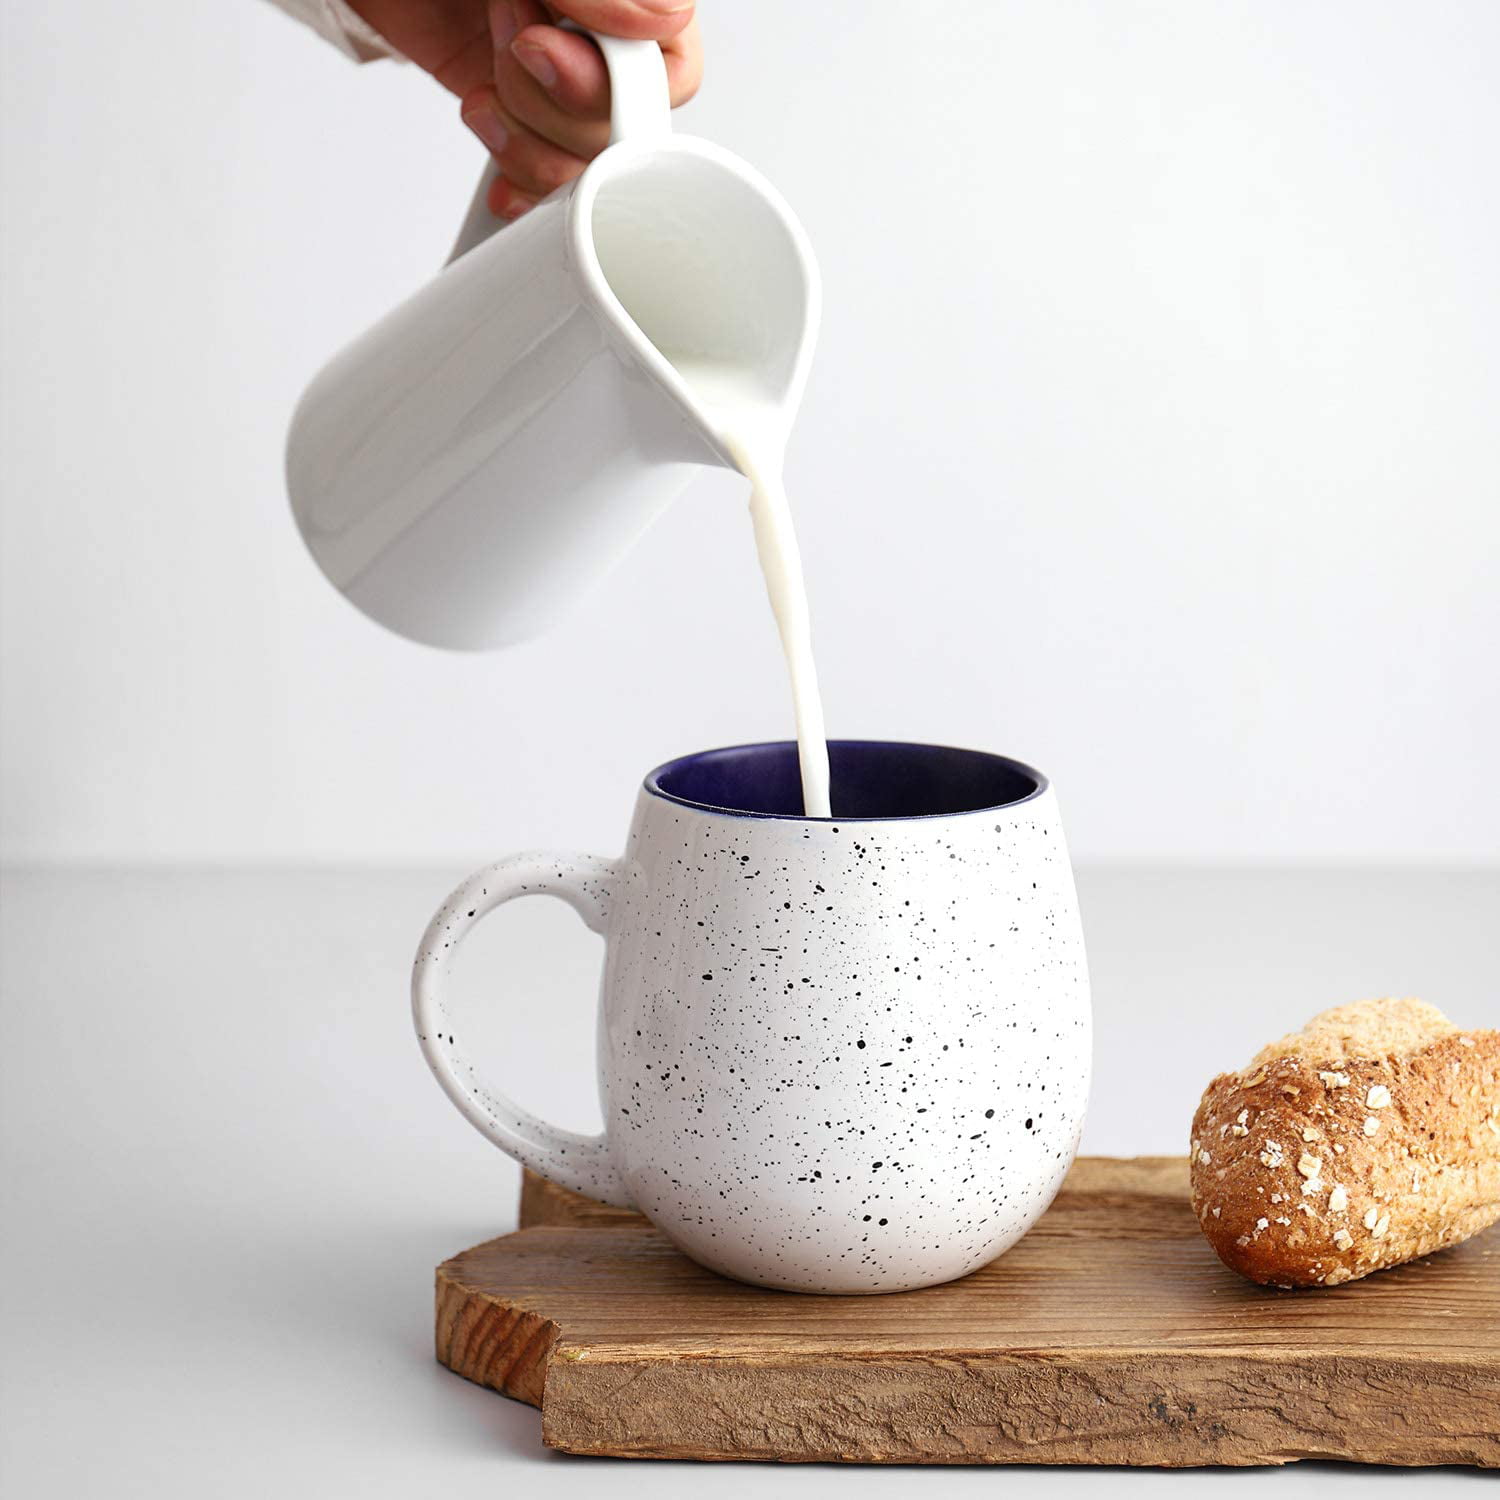 Coffee Mug Sets of 4, Lareina Cute Coffee Mug gift, 17 Ounce Large res –  Lareina Life